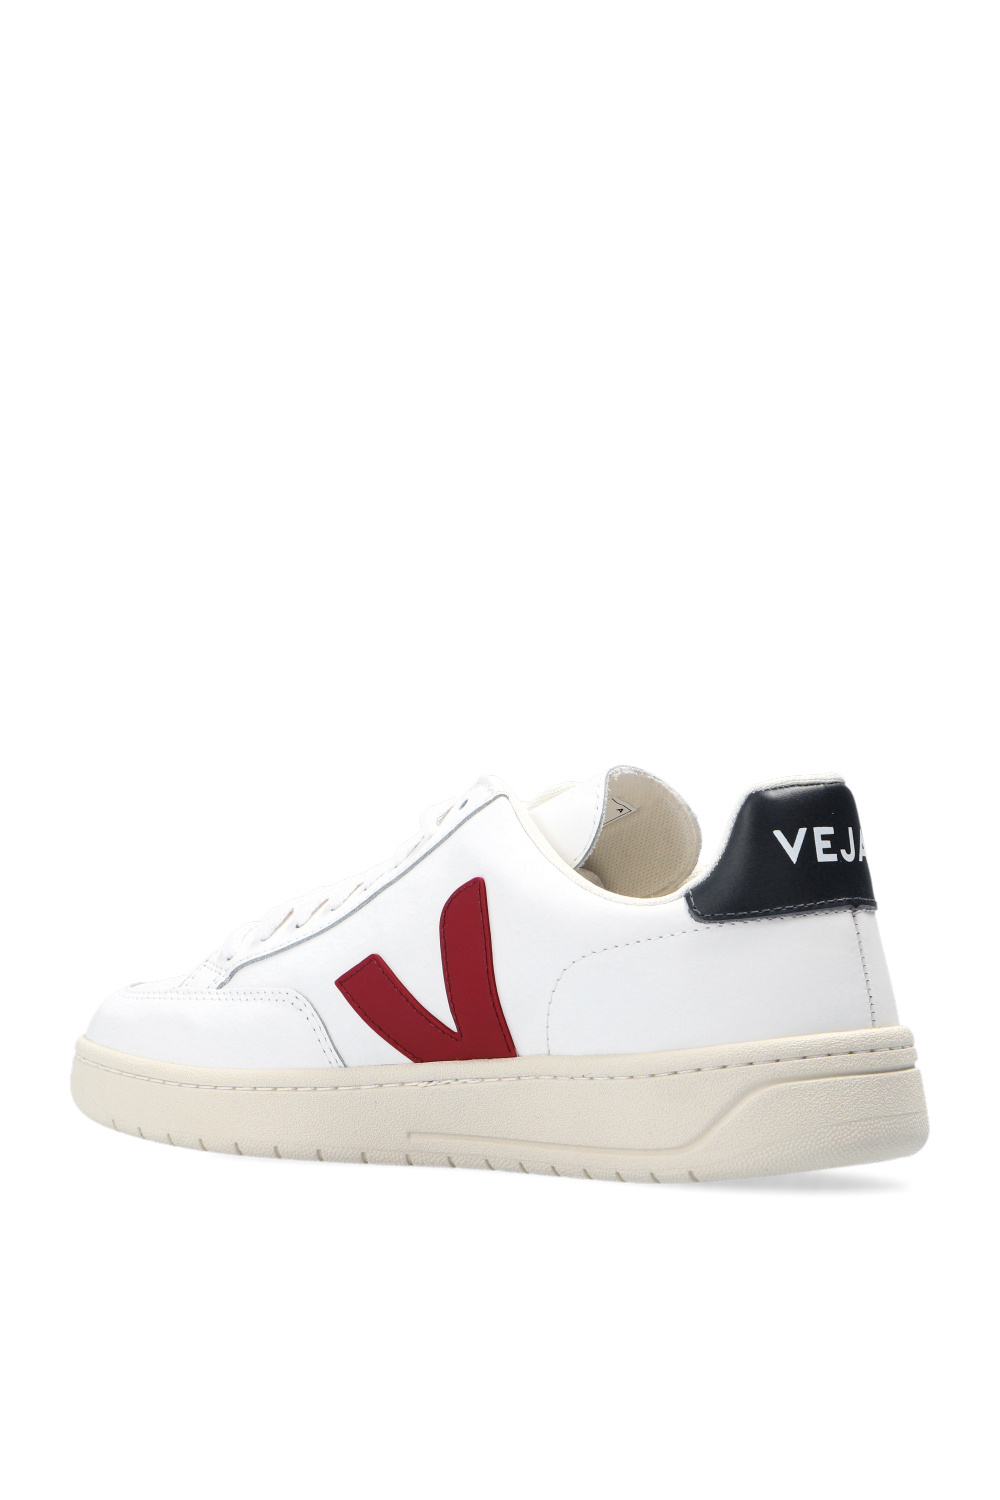 veja urca ‘V-12 Leather’ sneakers